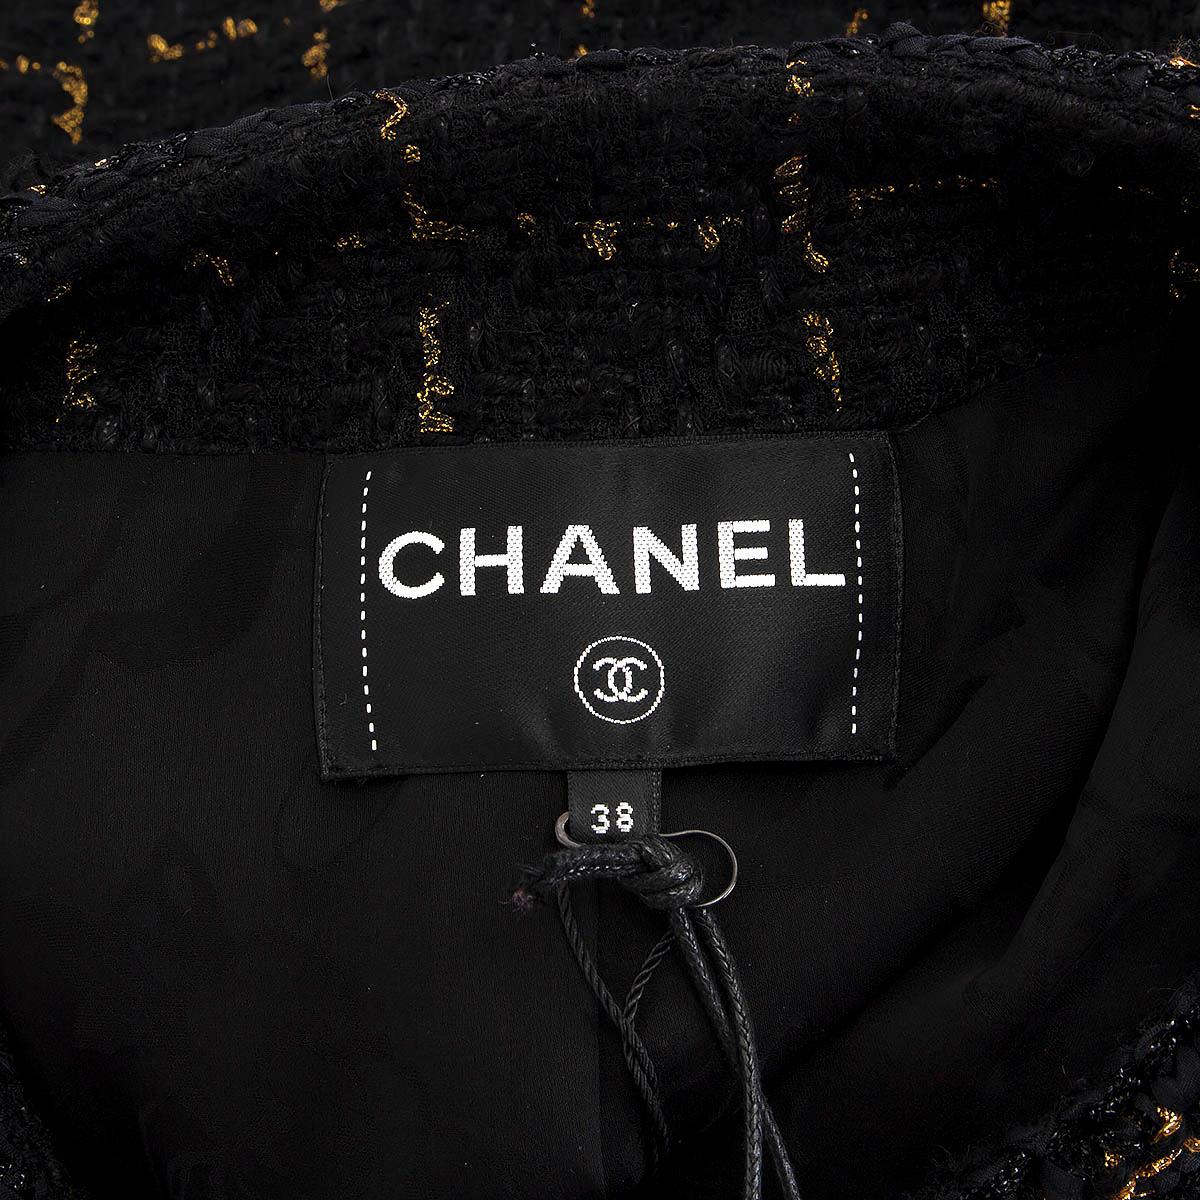 CHANEL black & gold viscose 20176 16K CHECK TWEED Jacket 38 S 5